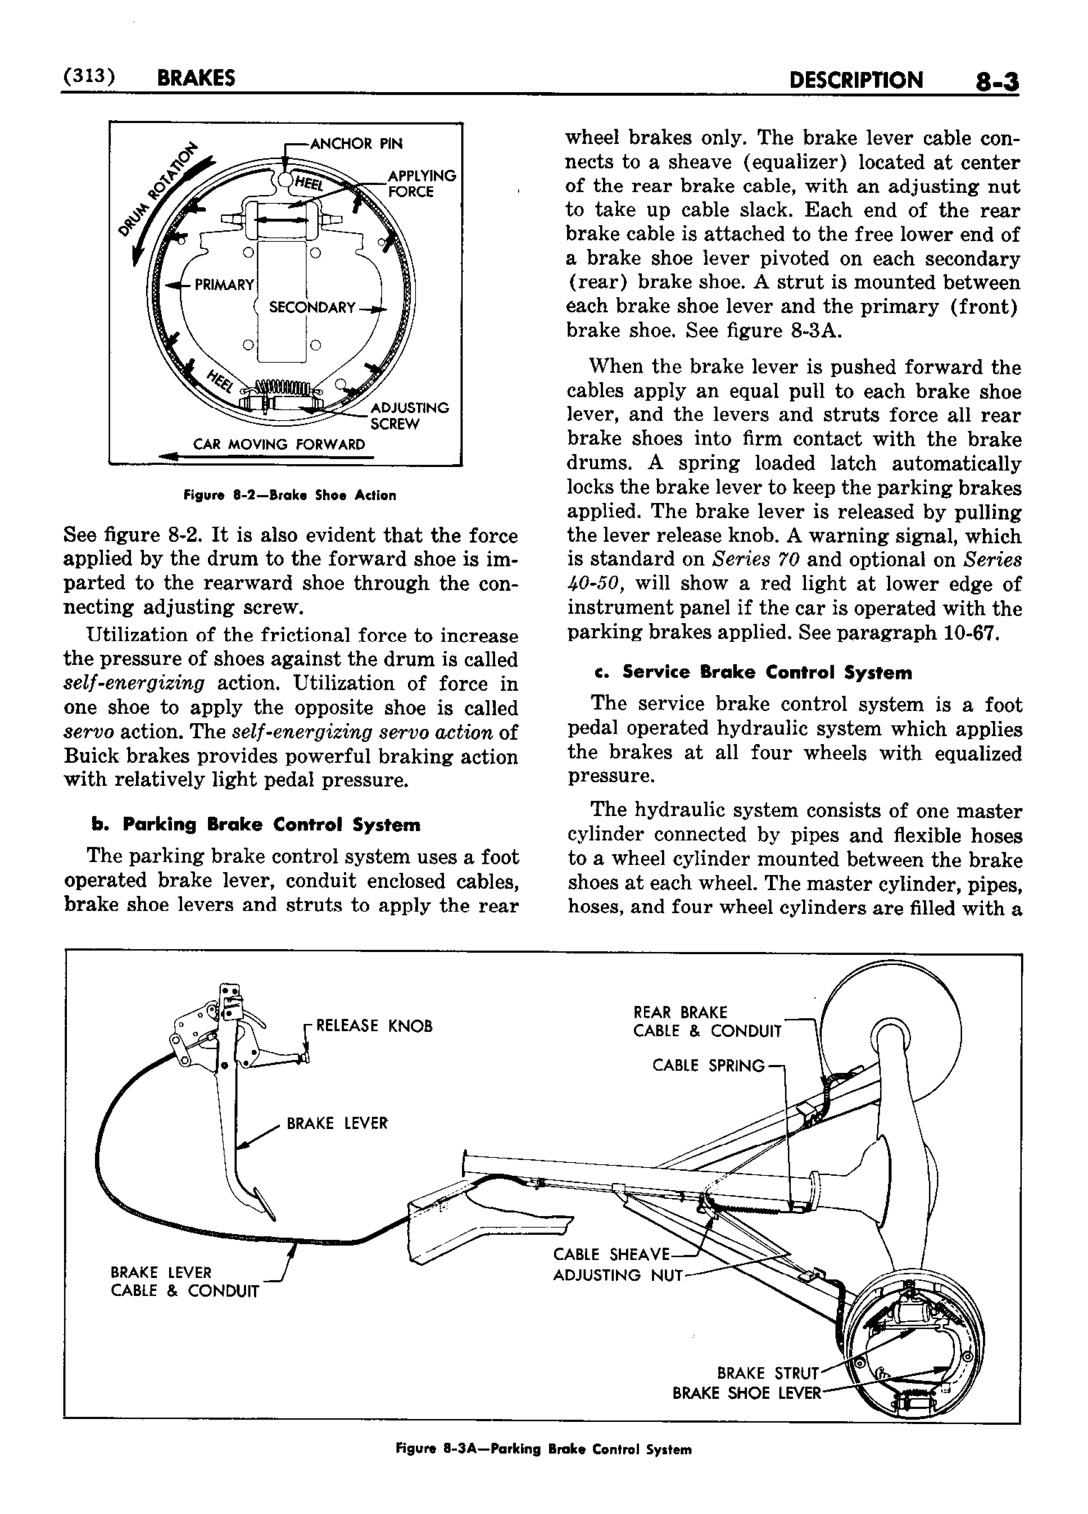 n_09 1952 Buick Shop Manual - Brakes-003-003.jpg